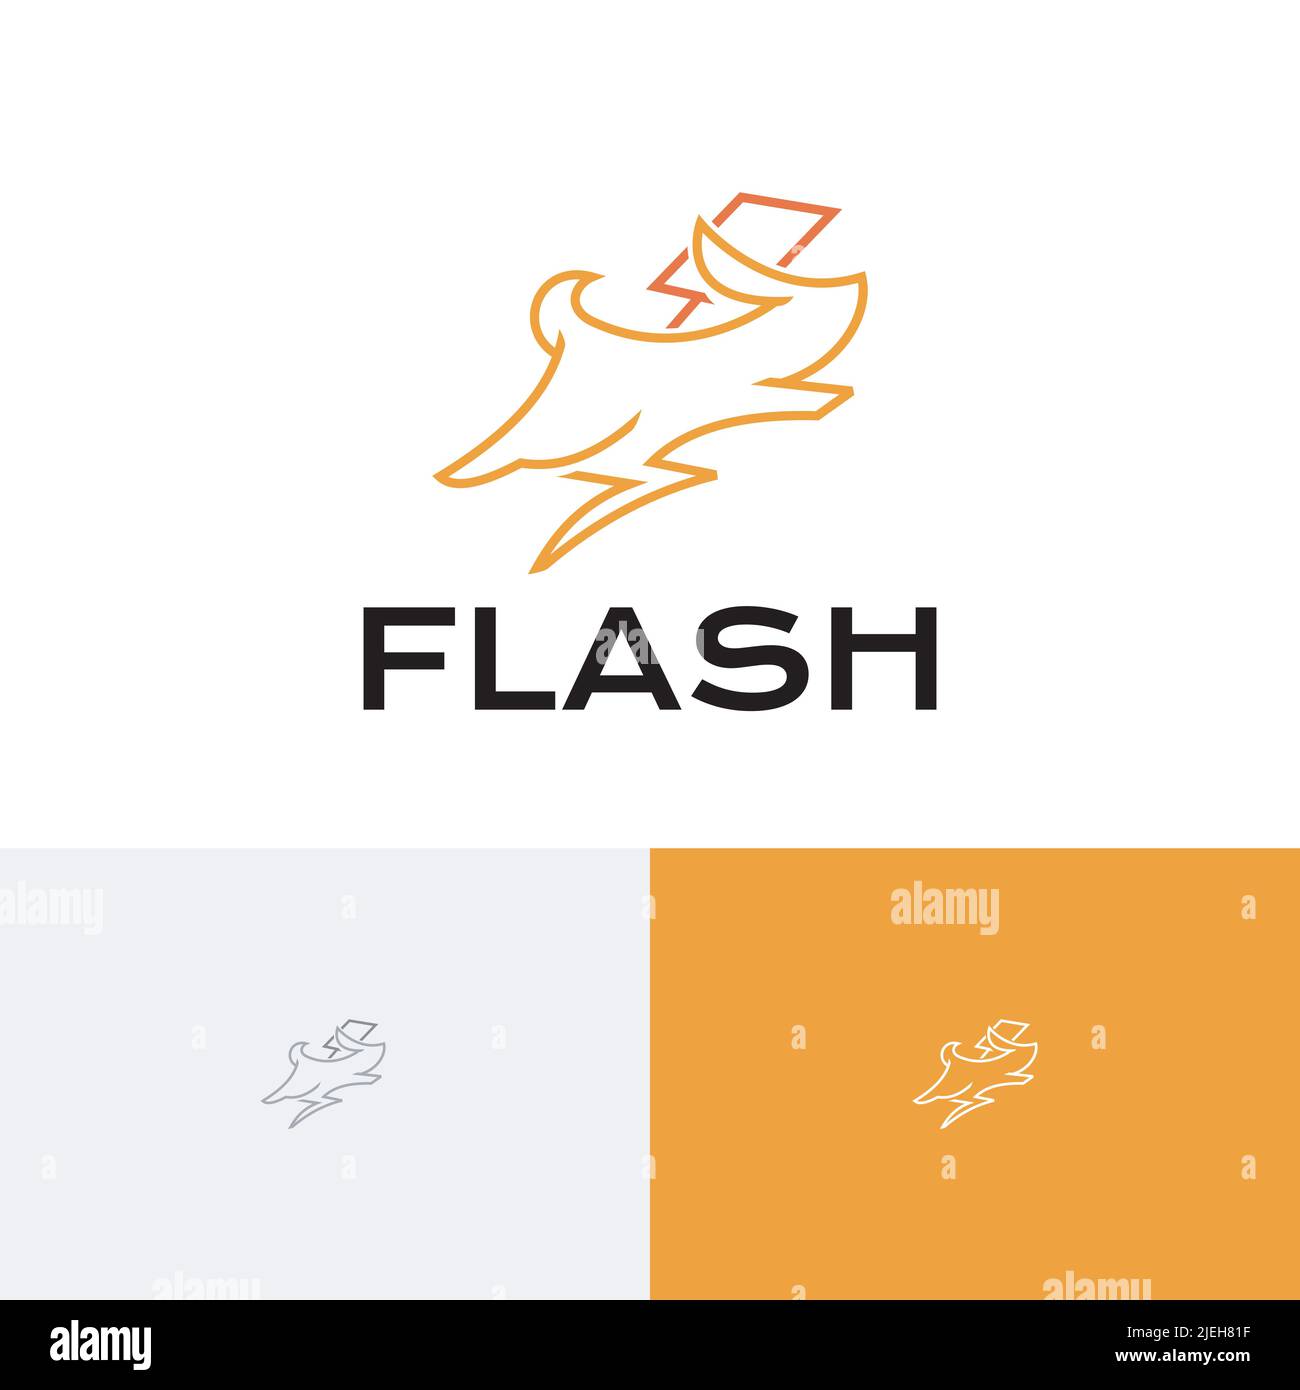 Bunny Rabbit Flash Bolt Thunder Run Electricity Energy Logo Stock Vector